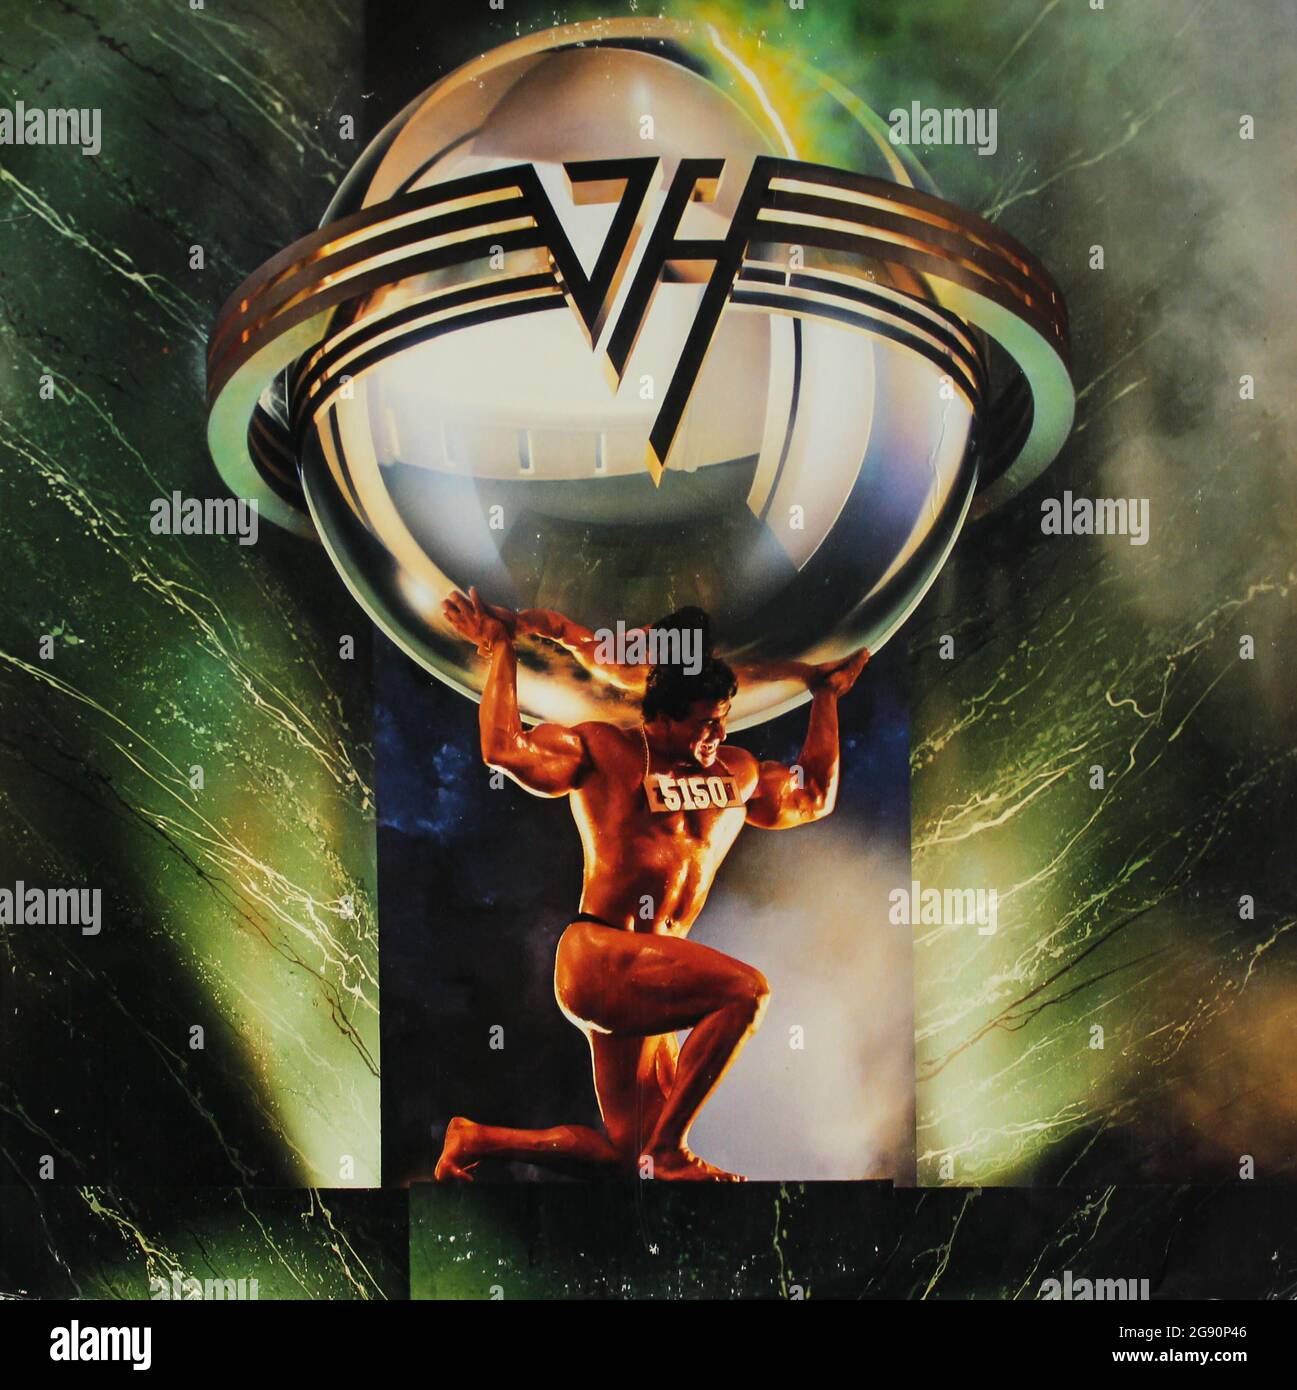 Hard rock, heavy metal and glam metal band, Van Halen music album on vinyl record LP disc.  Titled: 5150 album cover Stock Photo